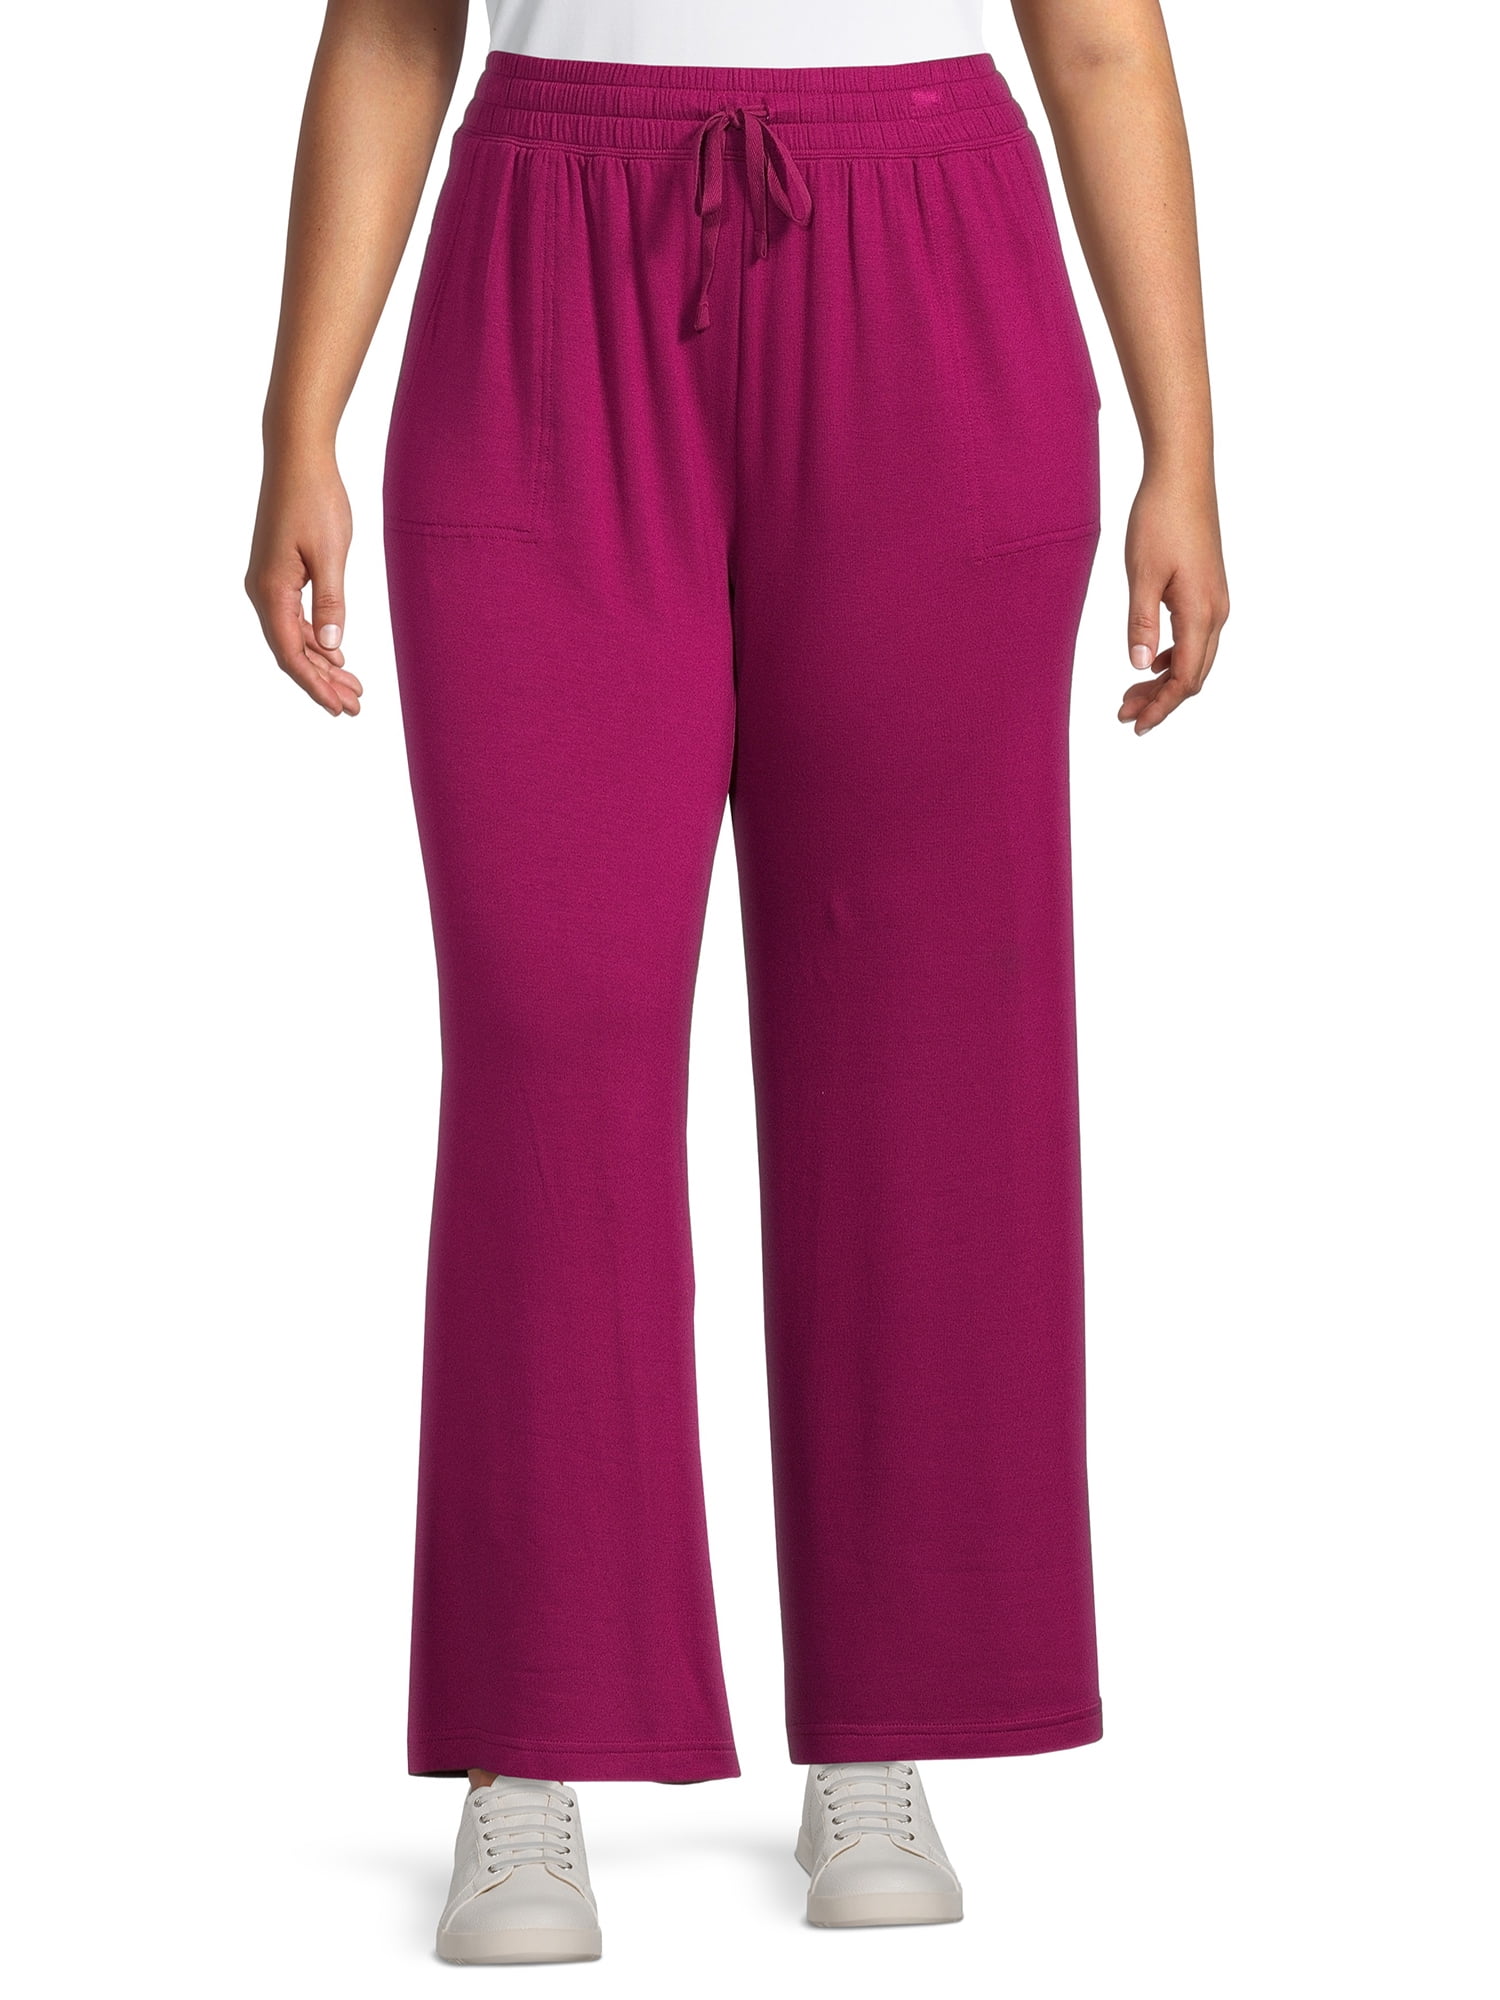 Terra & Sky Women's Plus Size Knit Pants - Walmart.com